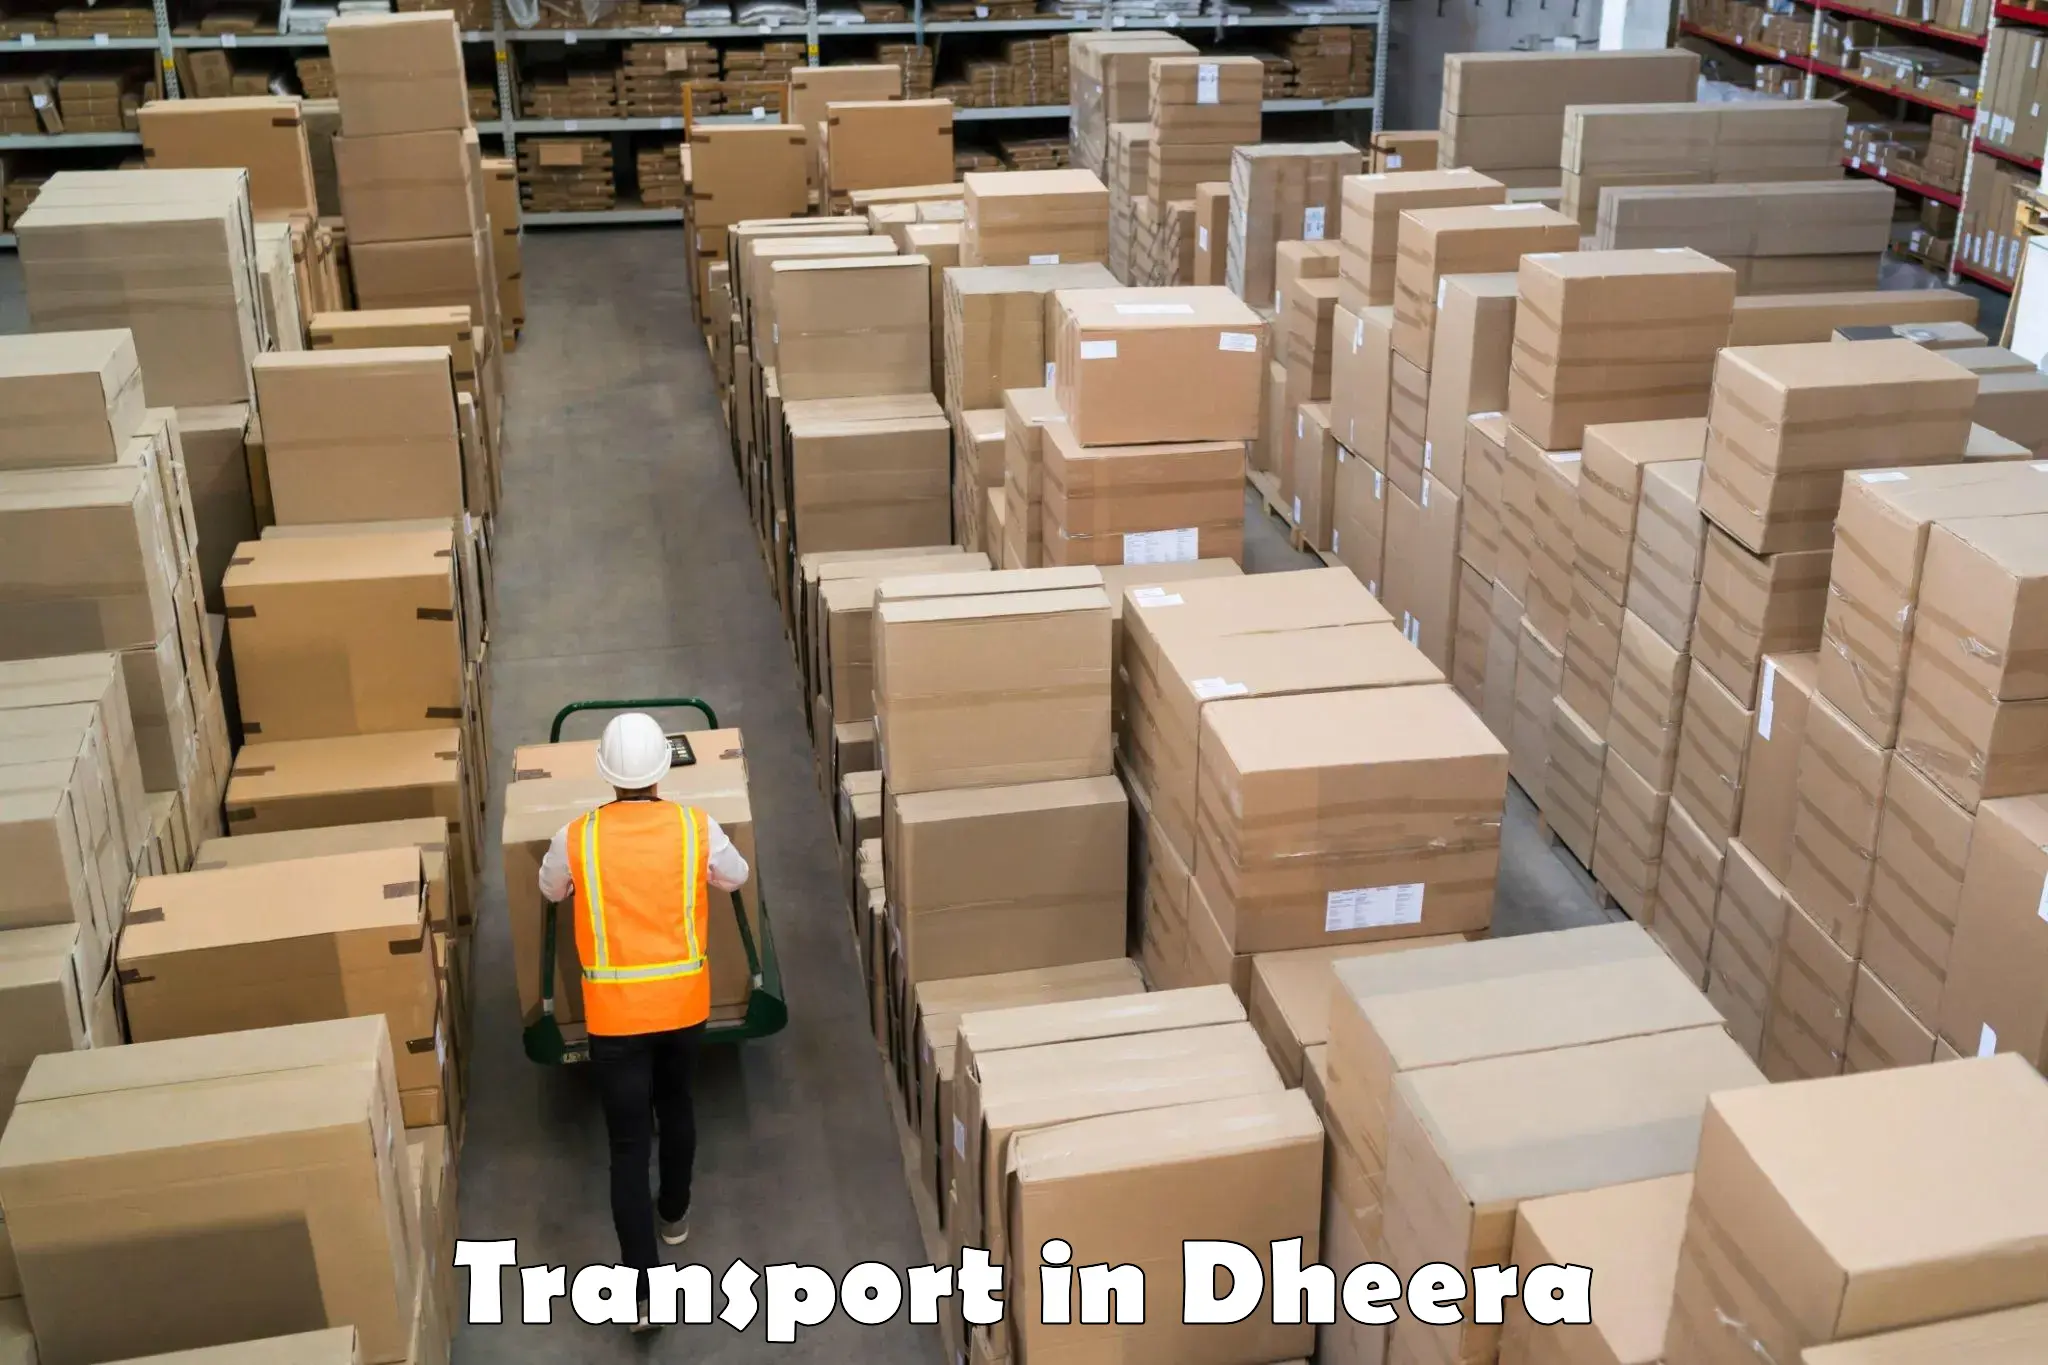 Bike shipping service in Dheera